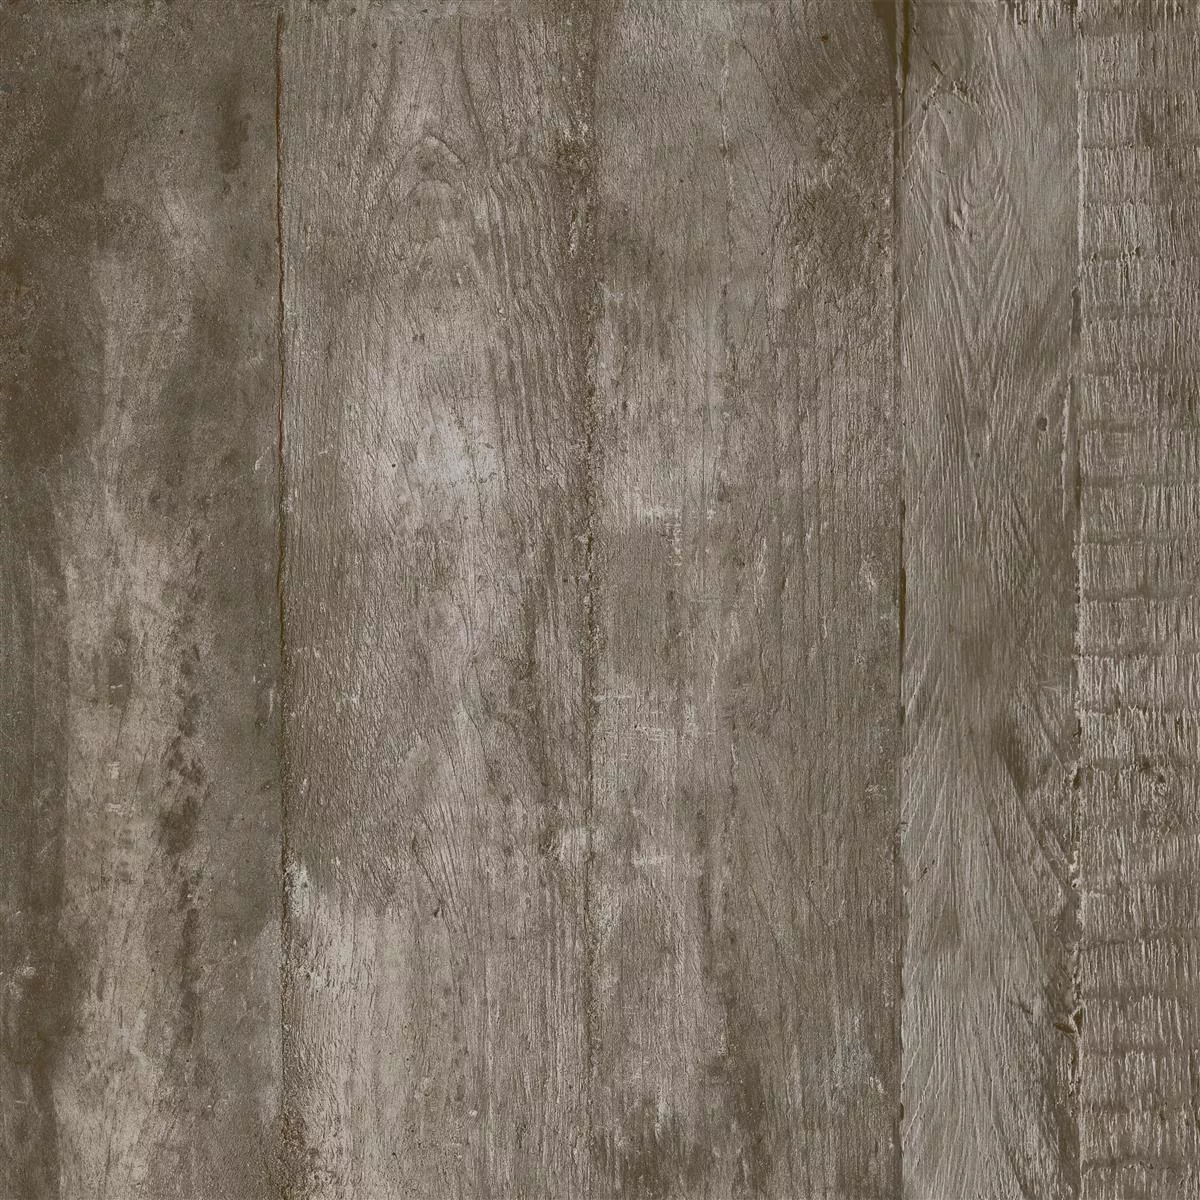 Floor Tiles Gorki Wood Optic 60x60 Glazed Brown